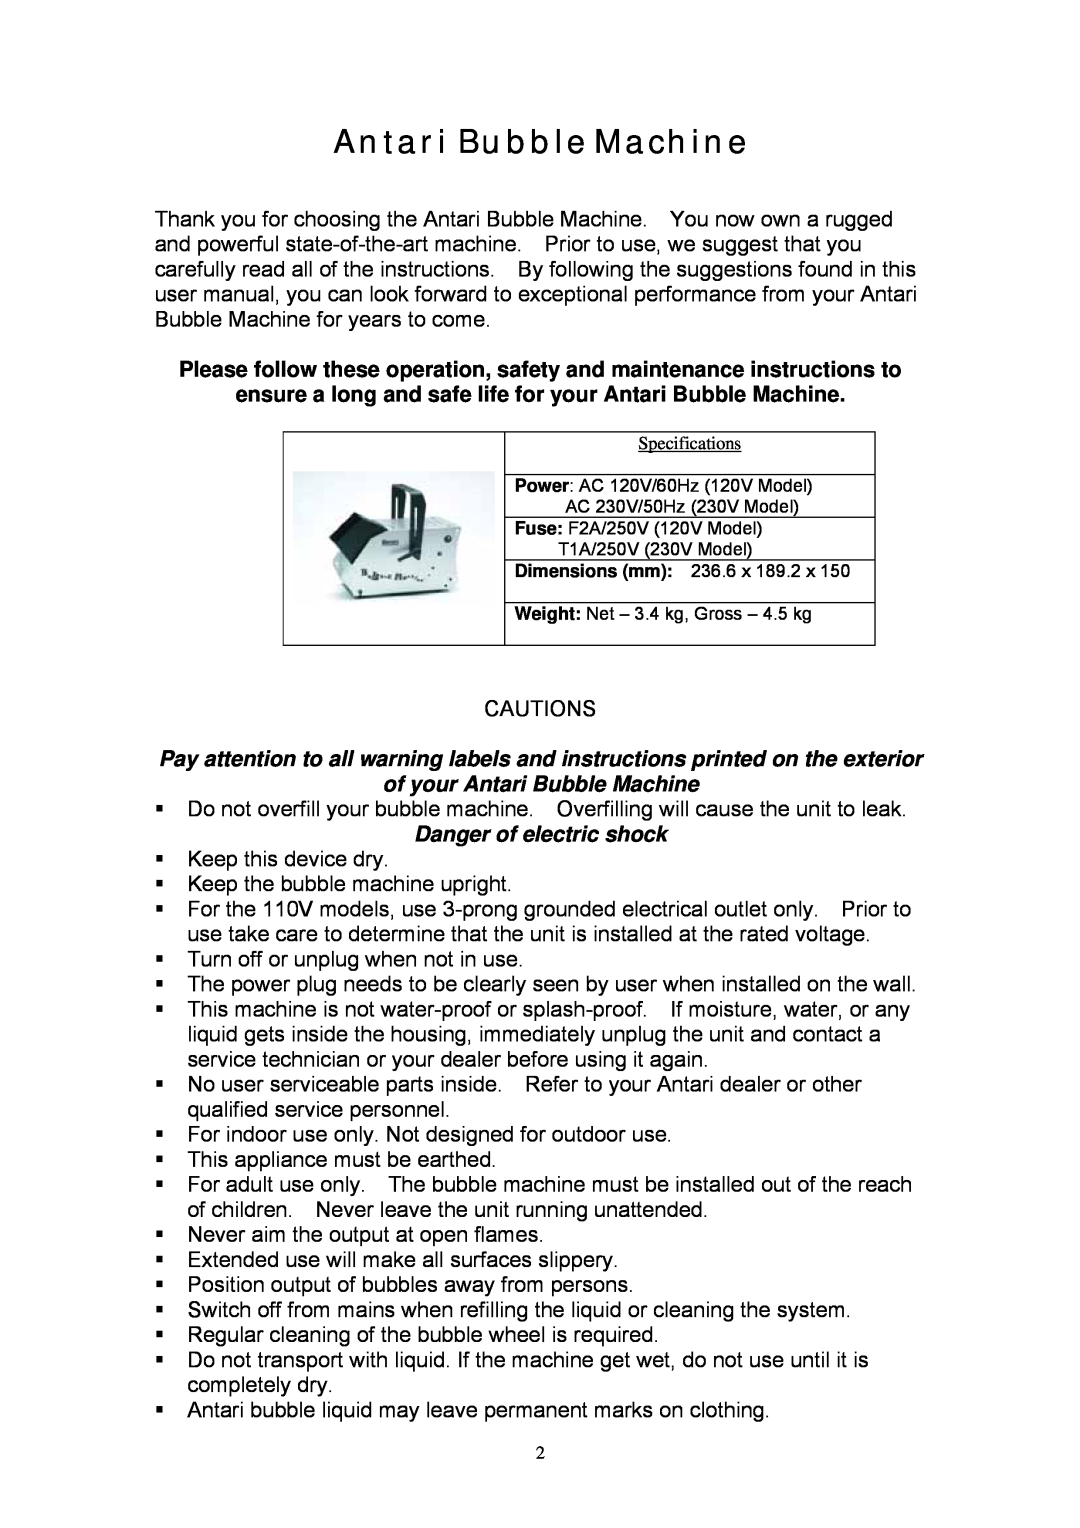 Antari Lighting and Effects B-100(X) user manual of your Antari Bubble Machine, Danger of electric shock 